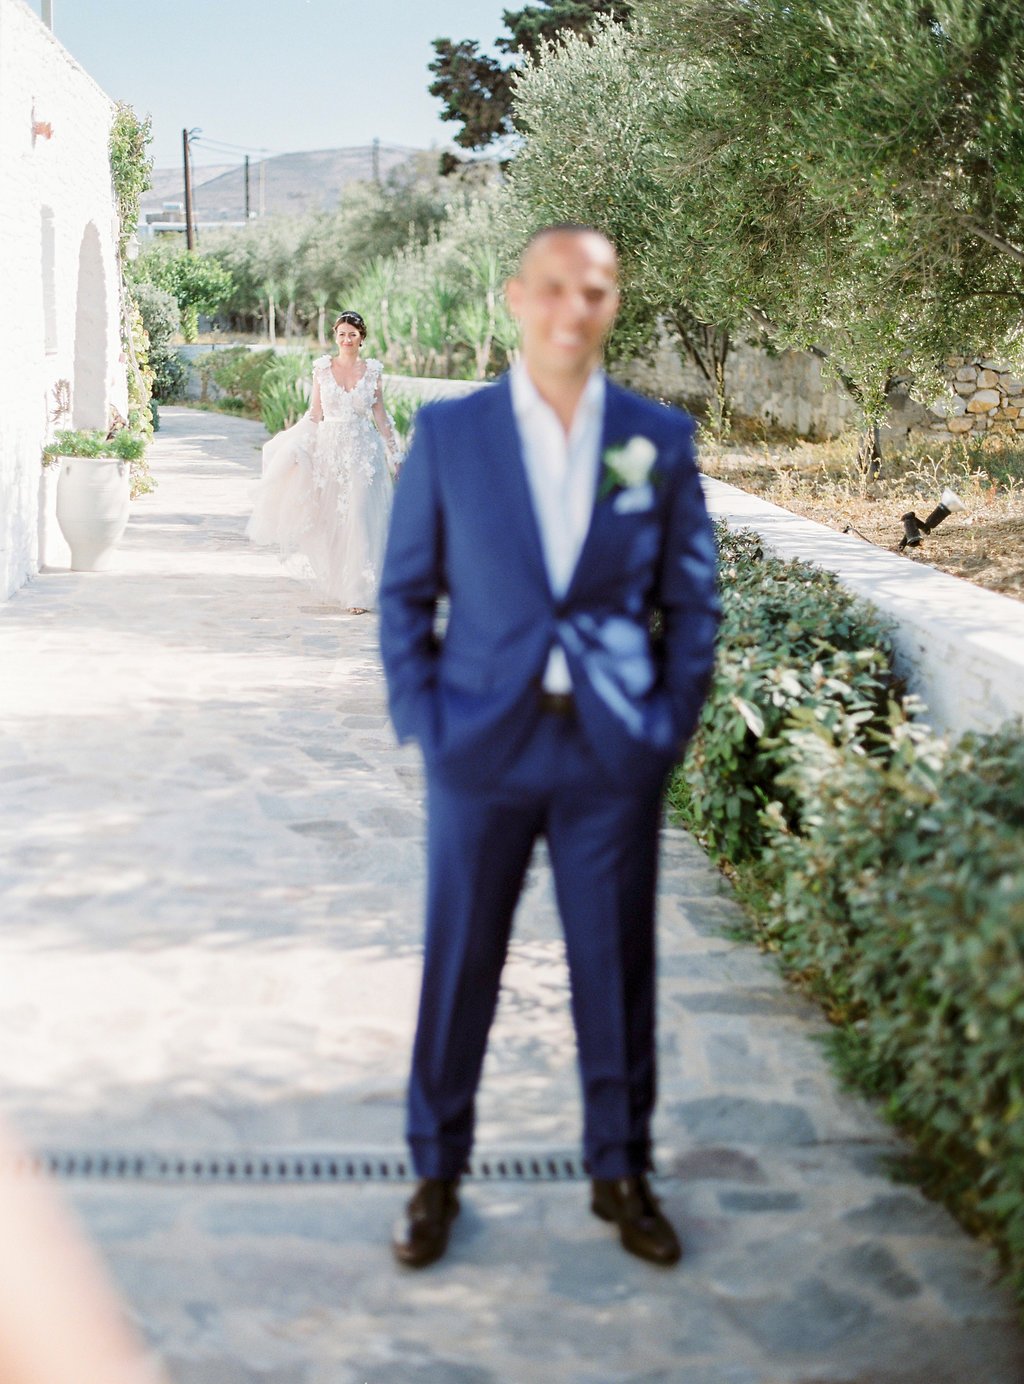 Daphne and Mike - Ethereal Paros wedding - Greece wedding photographers Les Anagnou